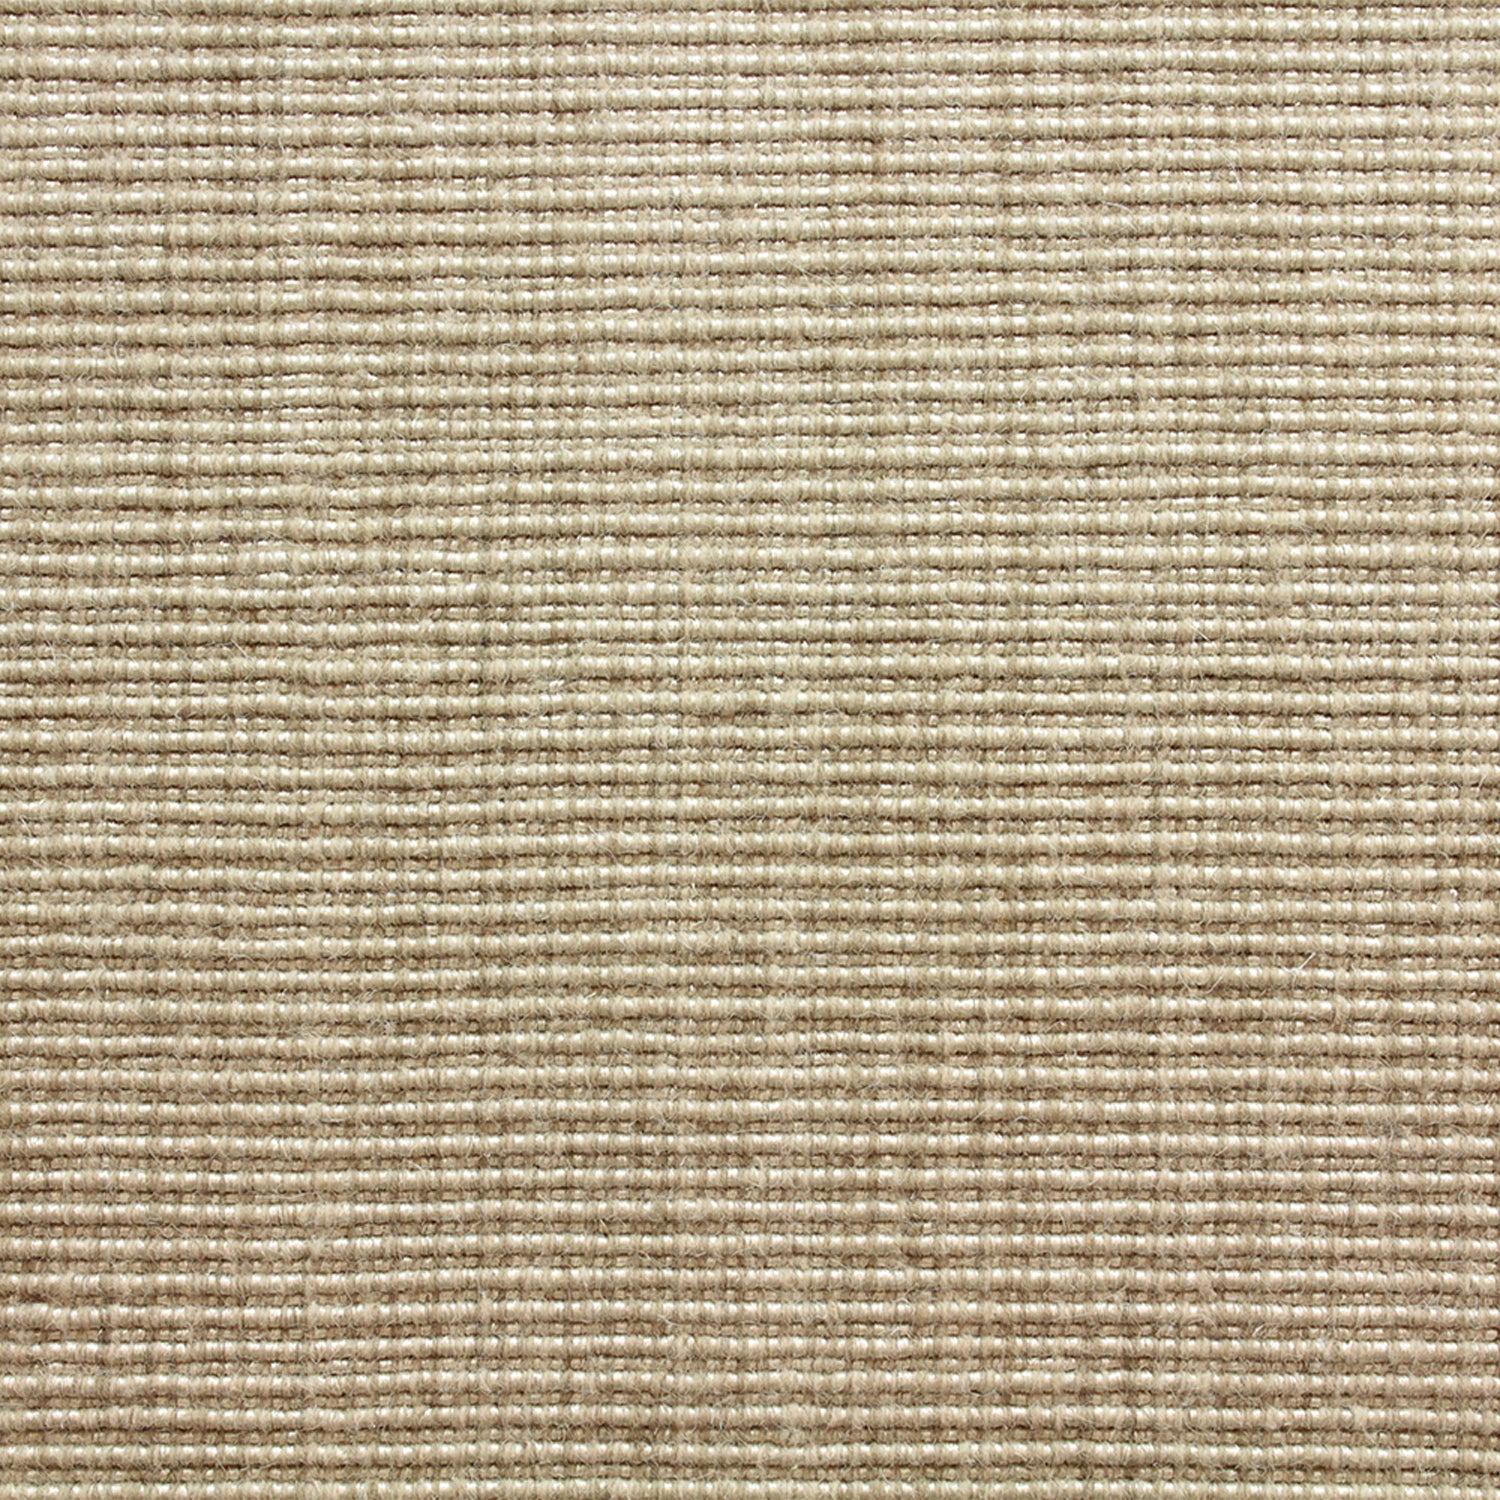 Wool-blend broadloom carpet swatch in a ribbed weave in tan.